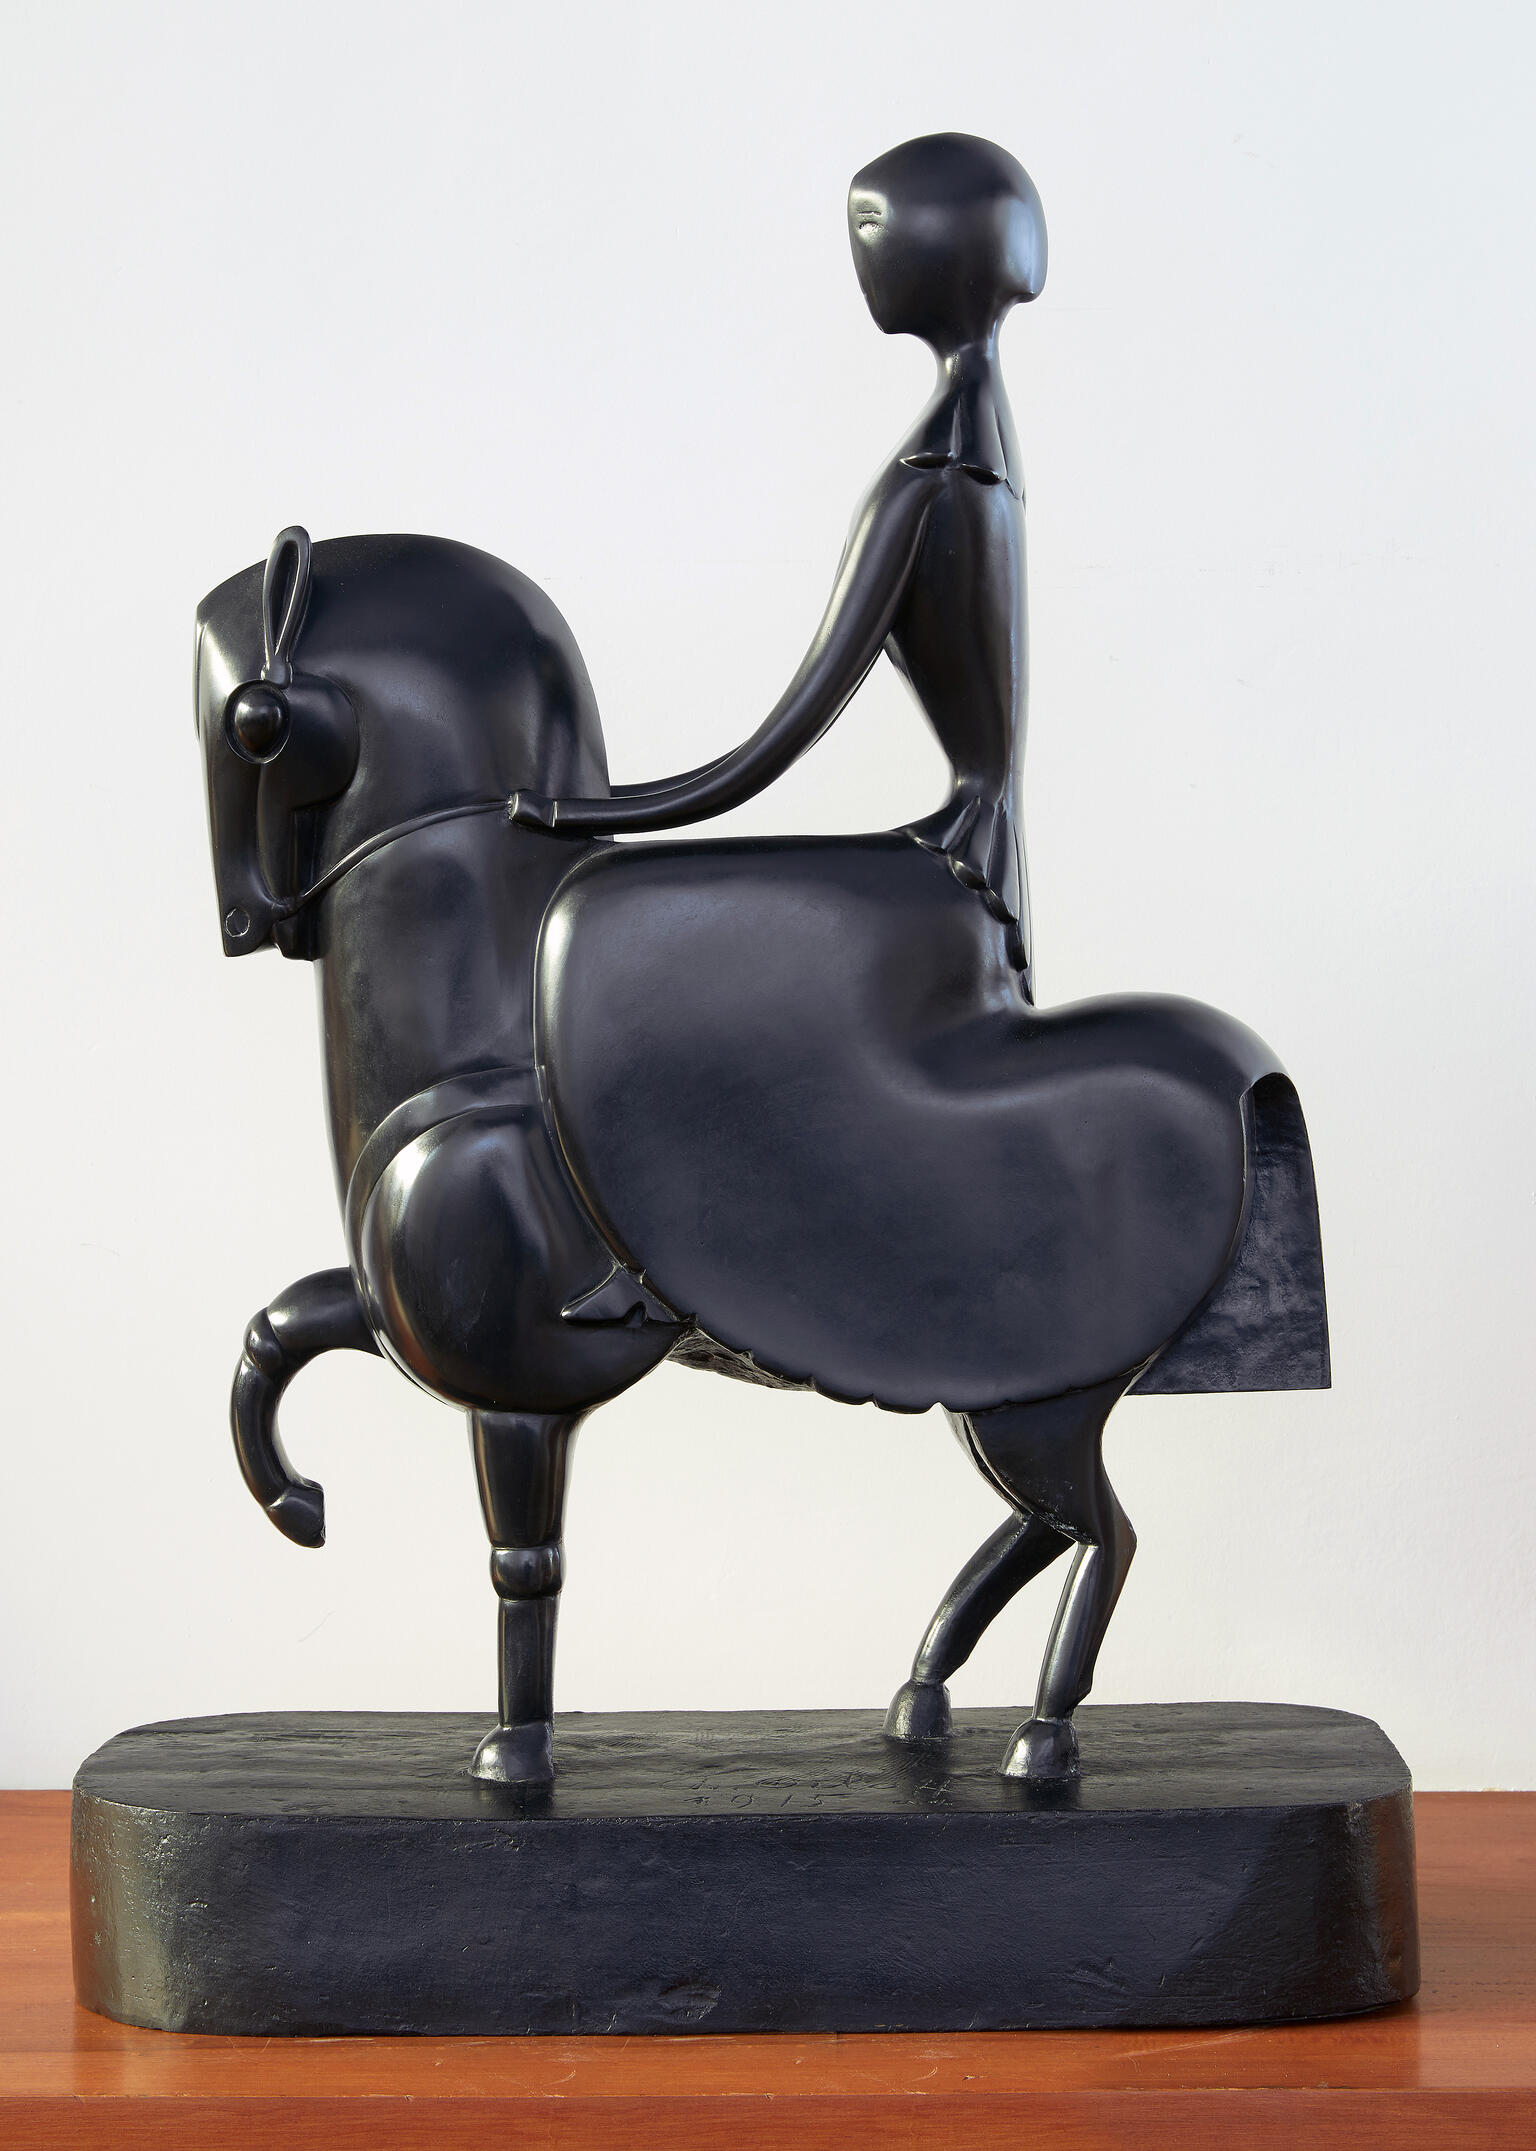 Sculpture of stylized figure on horseback.